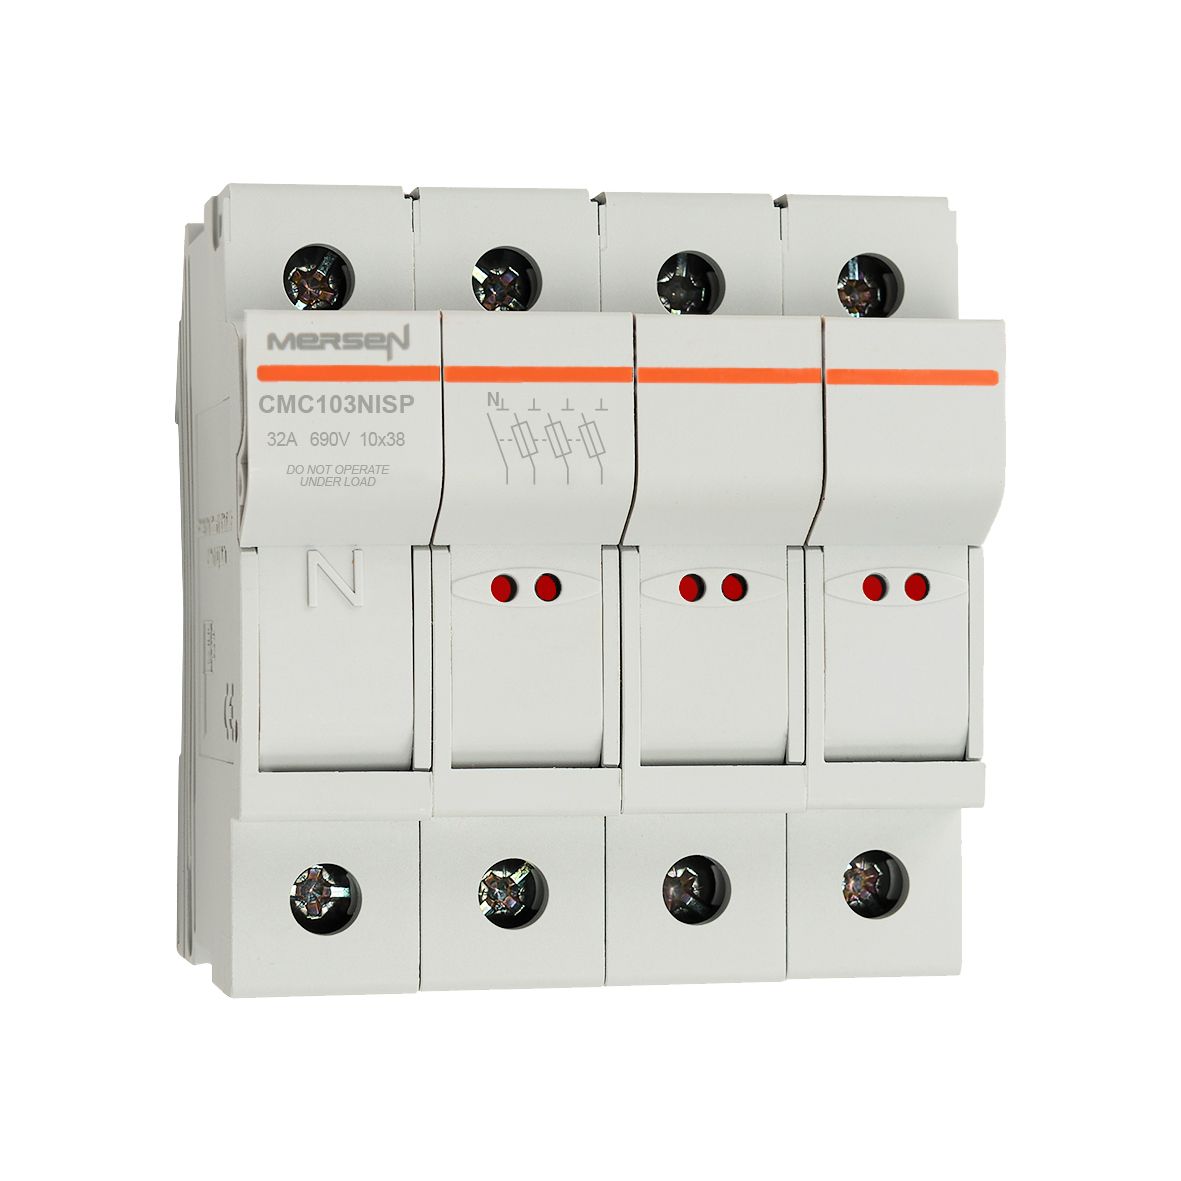 G1062767 - modular fuse holder, IEC, 3P+N, indicator light, 10x38, DIN rail mounting, IP20